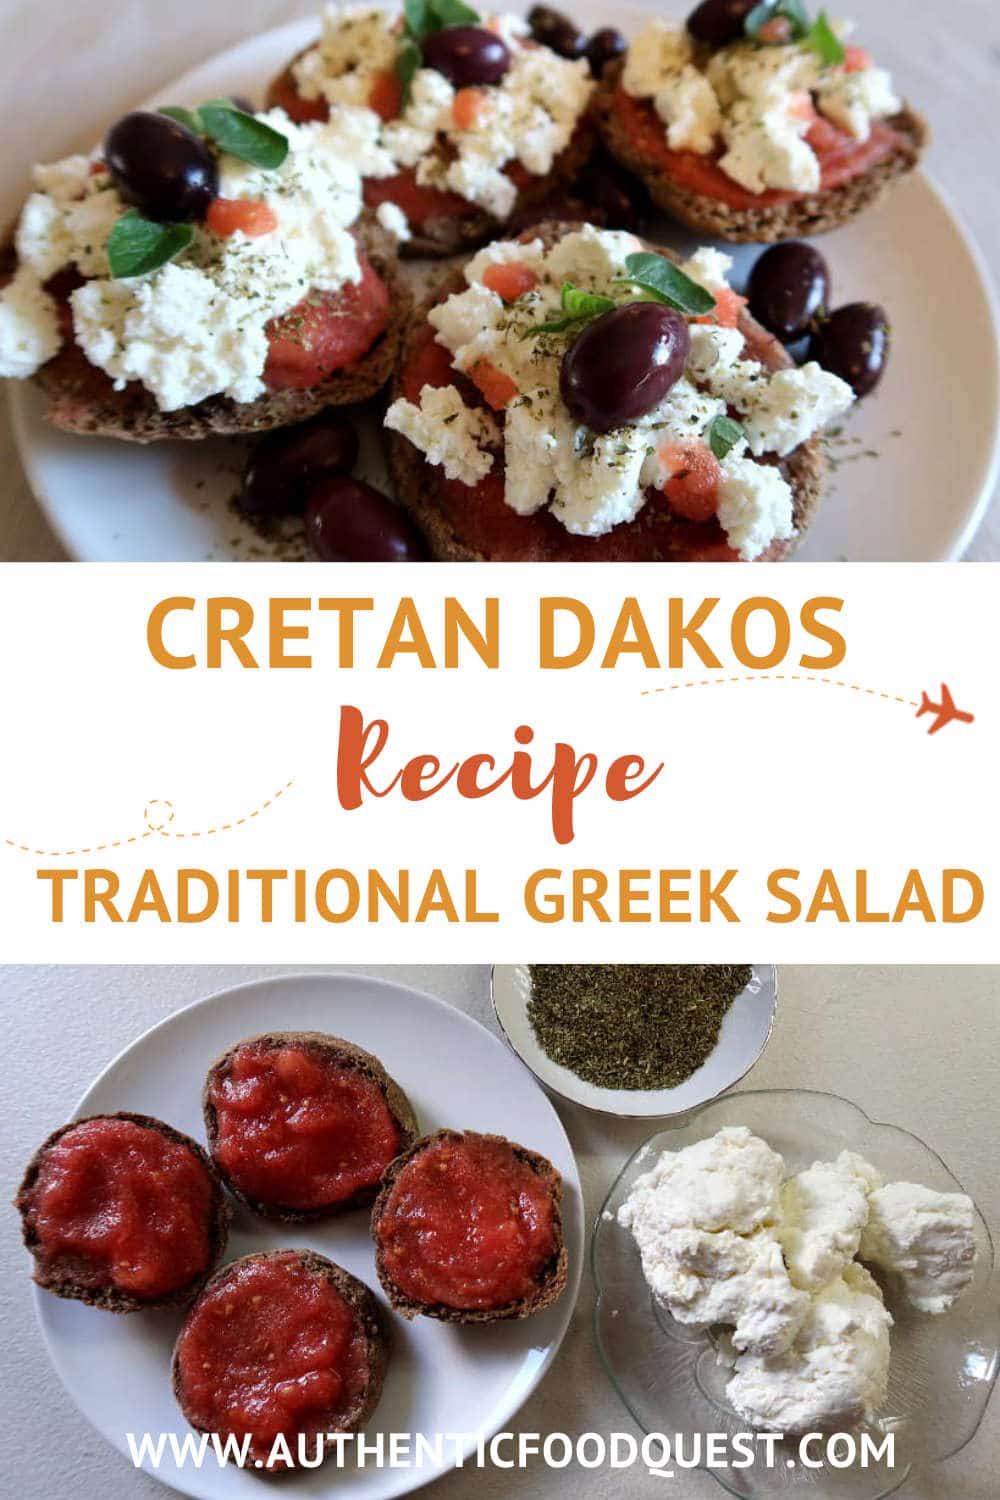 Cretan Dakos Recipe: The Best Authentic Cretan Salad You Want To Make